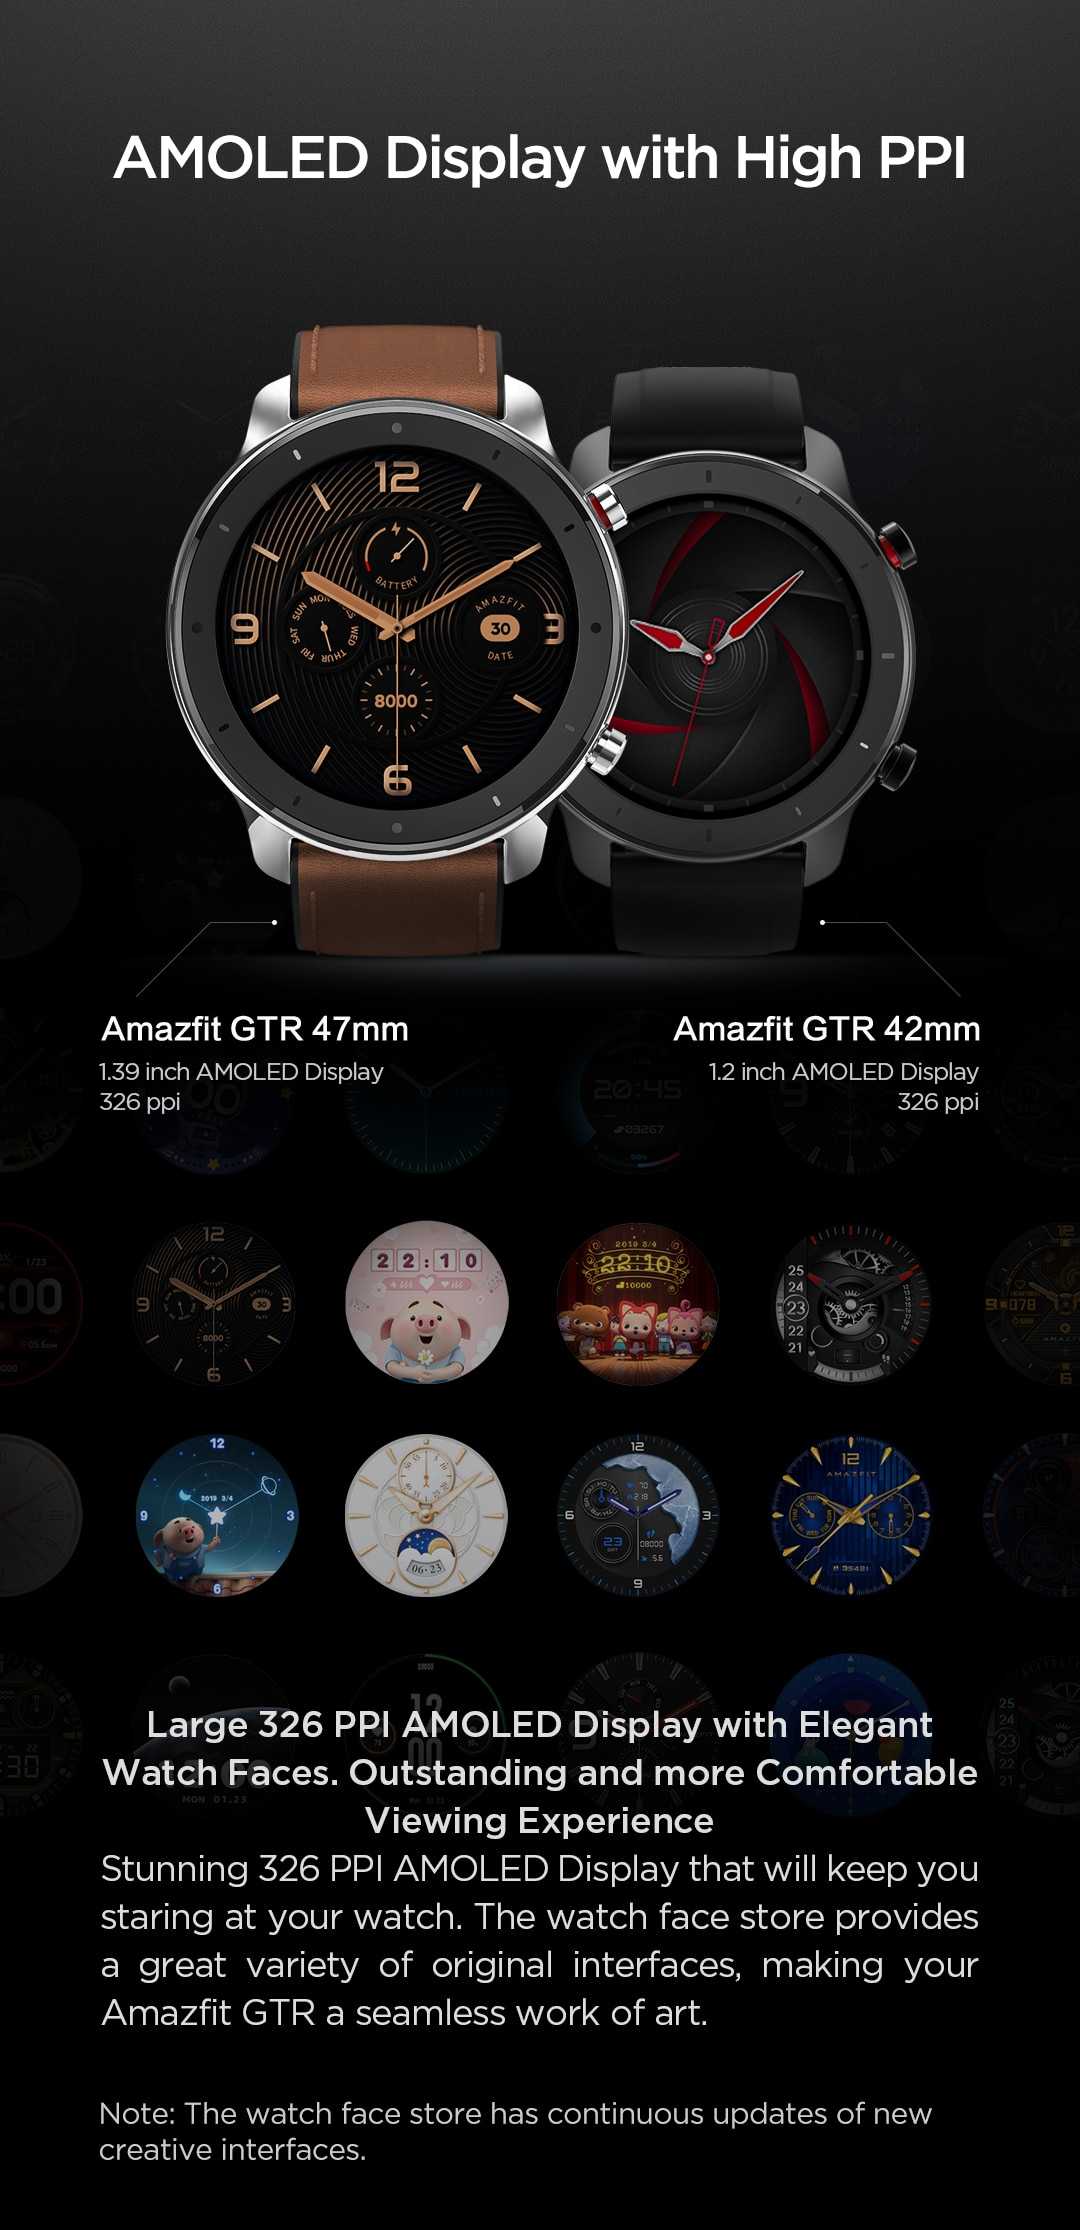 Amazfit GTR Smart Watch